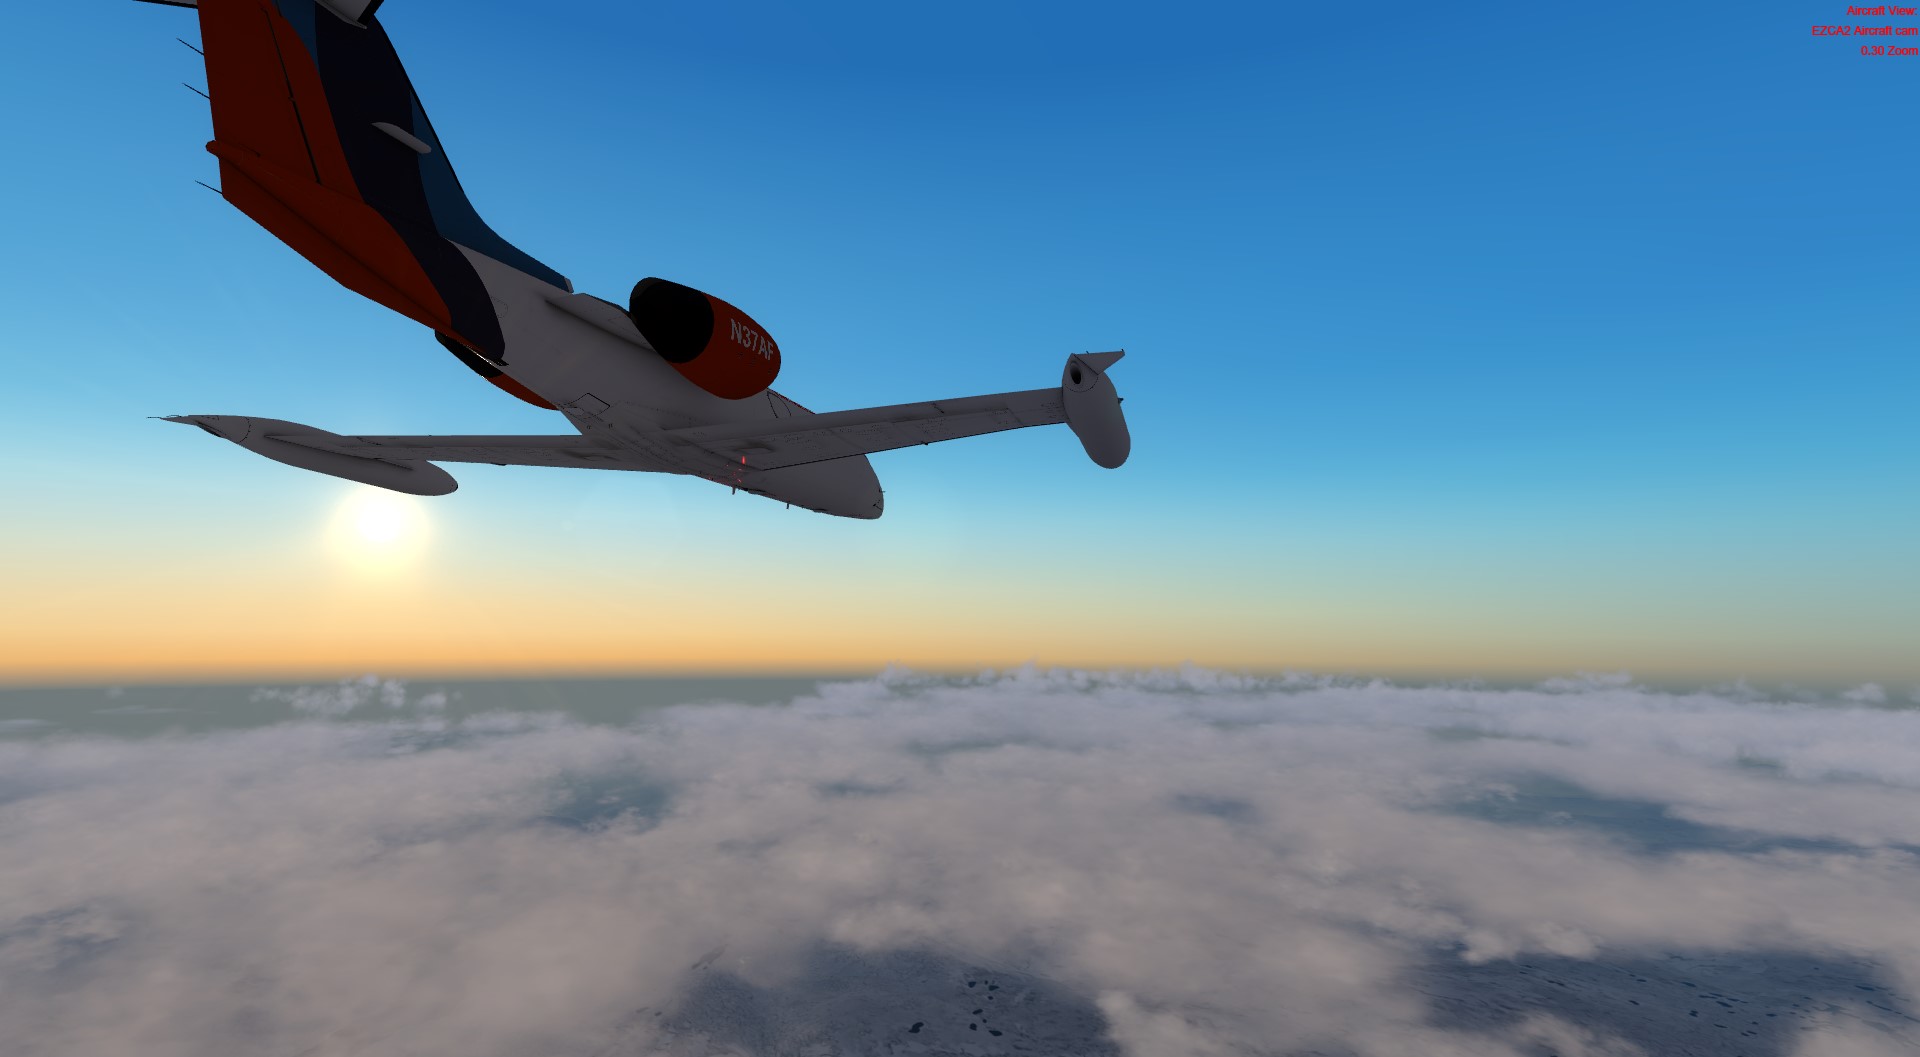 Flysimware – Learjet 35A 评测与冰岛送货之旅-513 